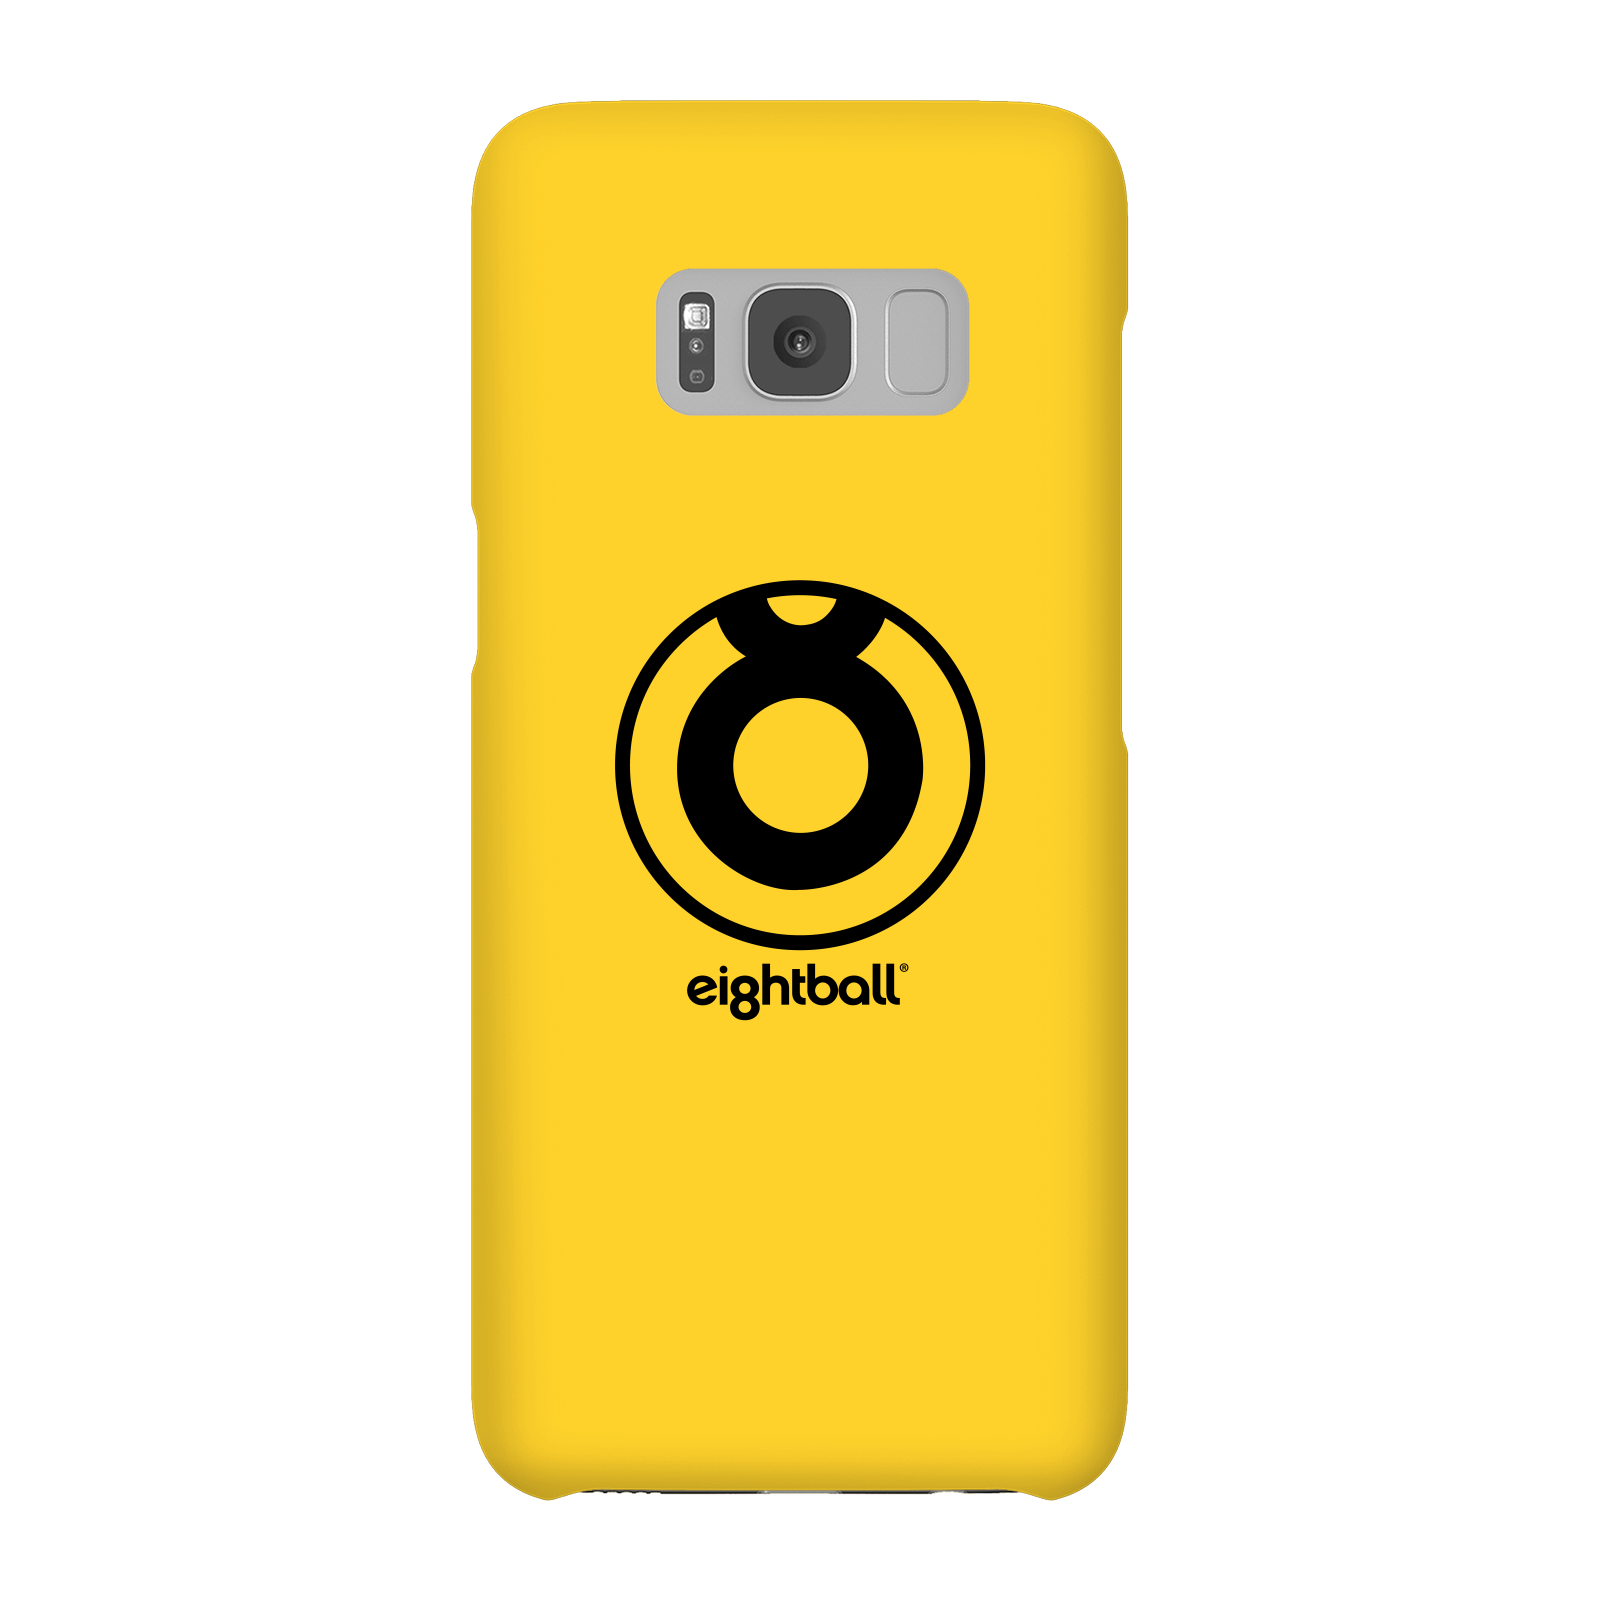 Funda Móvil Ei8htball Large Circle Logo para iPhone y Android - Samsung S8 - Carcasa rígida - Brillante